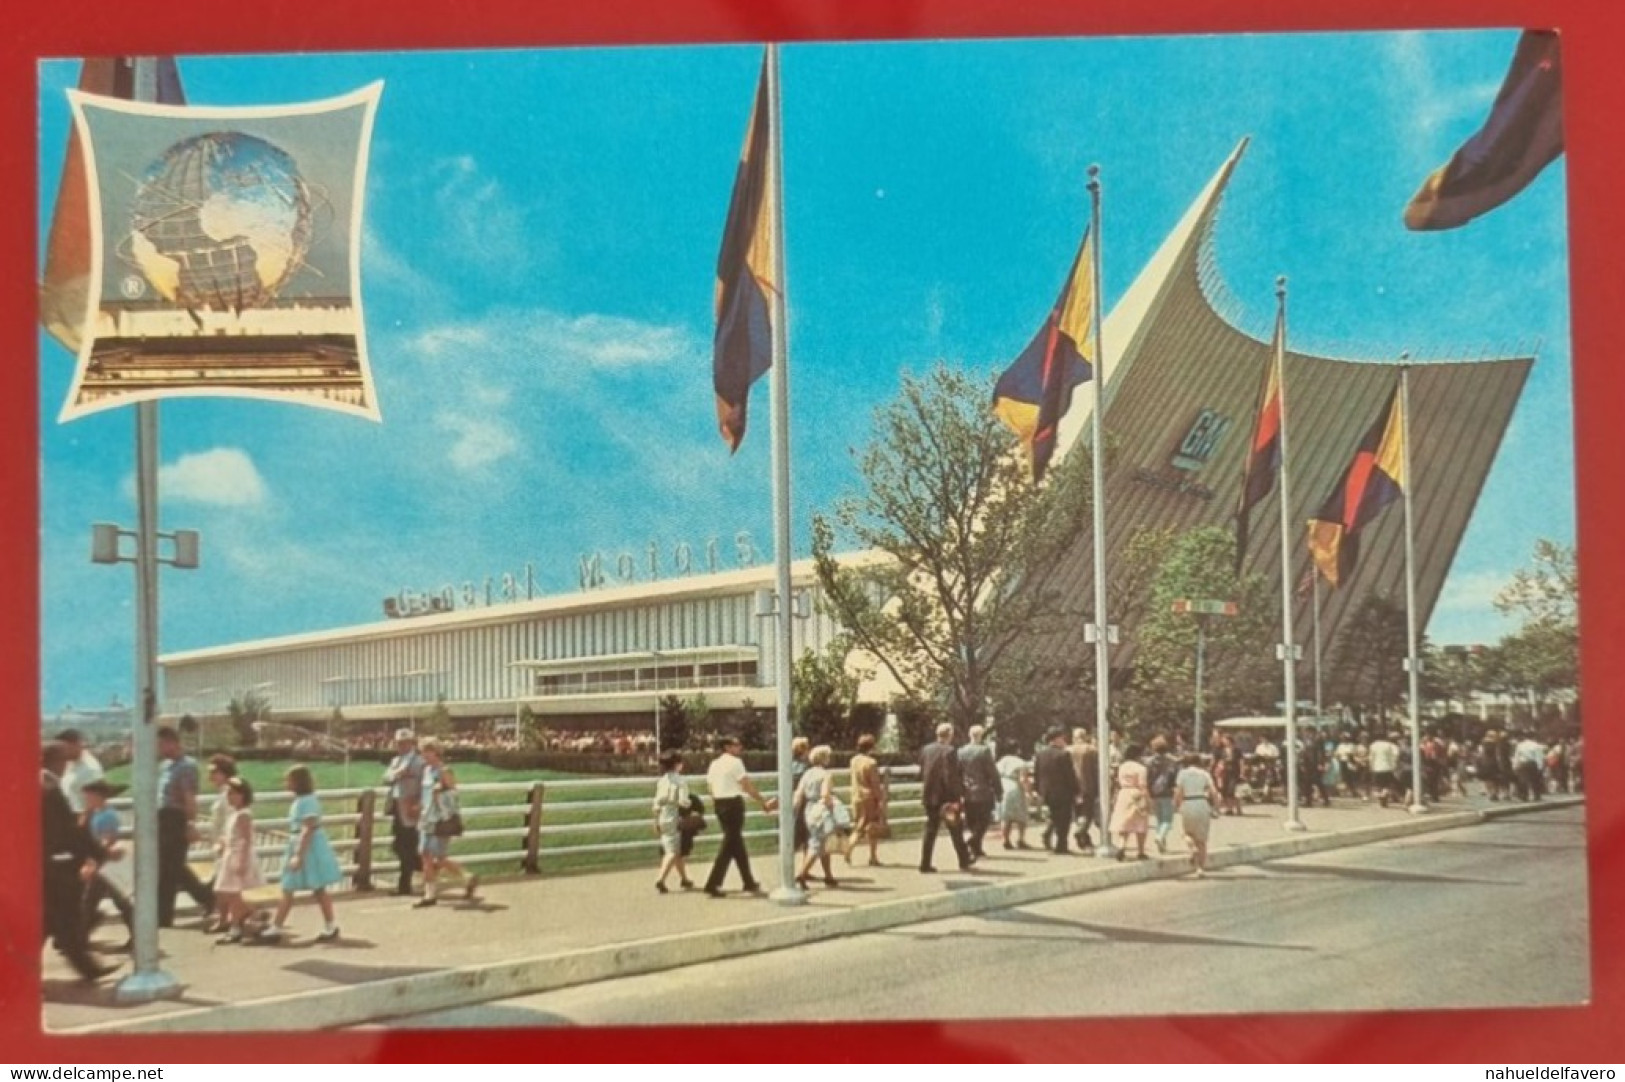 Uncirculated Postcard - USA - NY, NEW YORK WORLD'S FAIR 1964-65 - GENERAL MOTORS FUTURAMA BUILDING - Ausstellungen